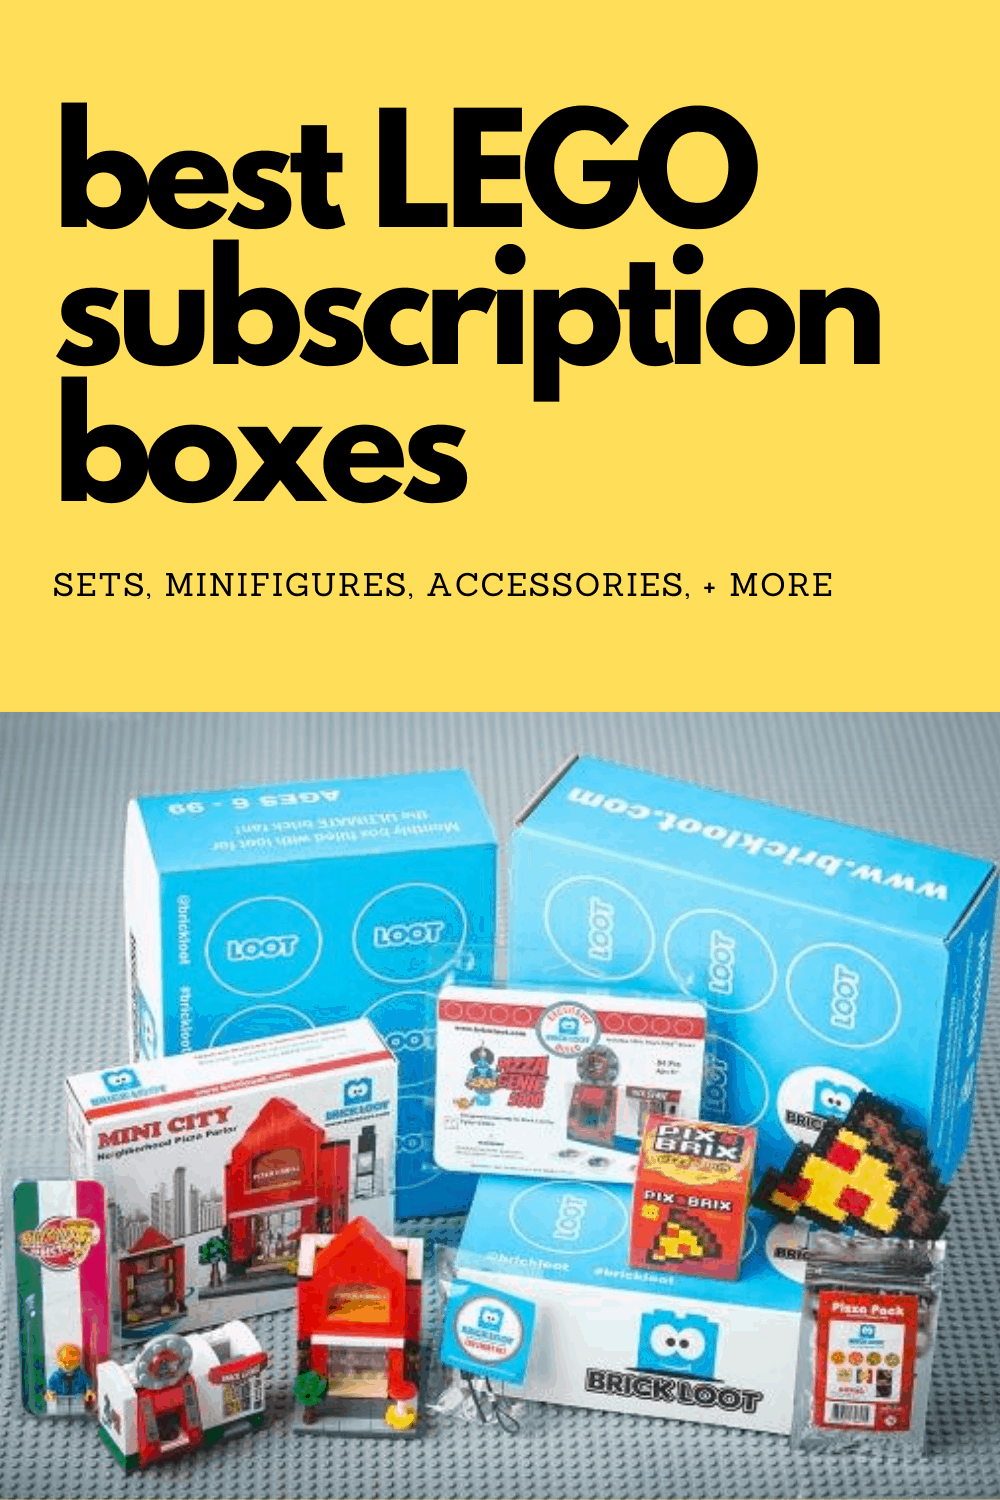 Best Lego Subscription Boxes